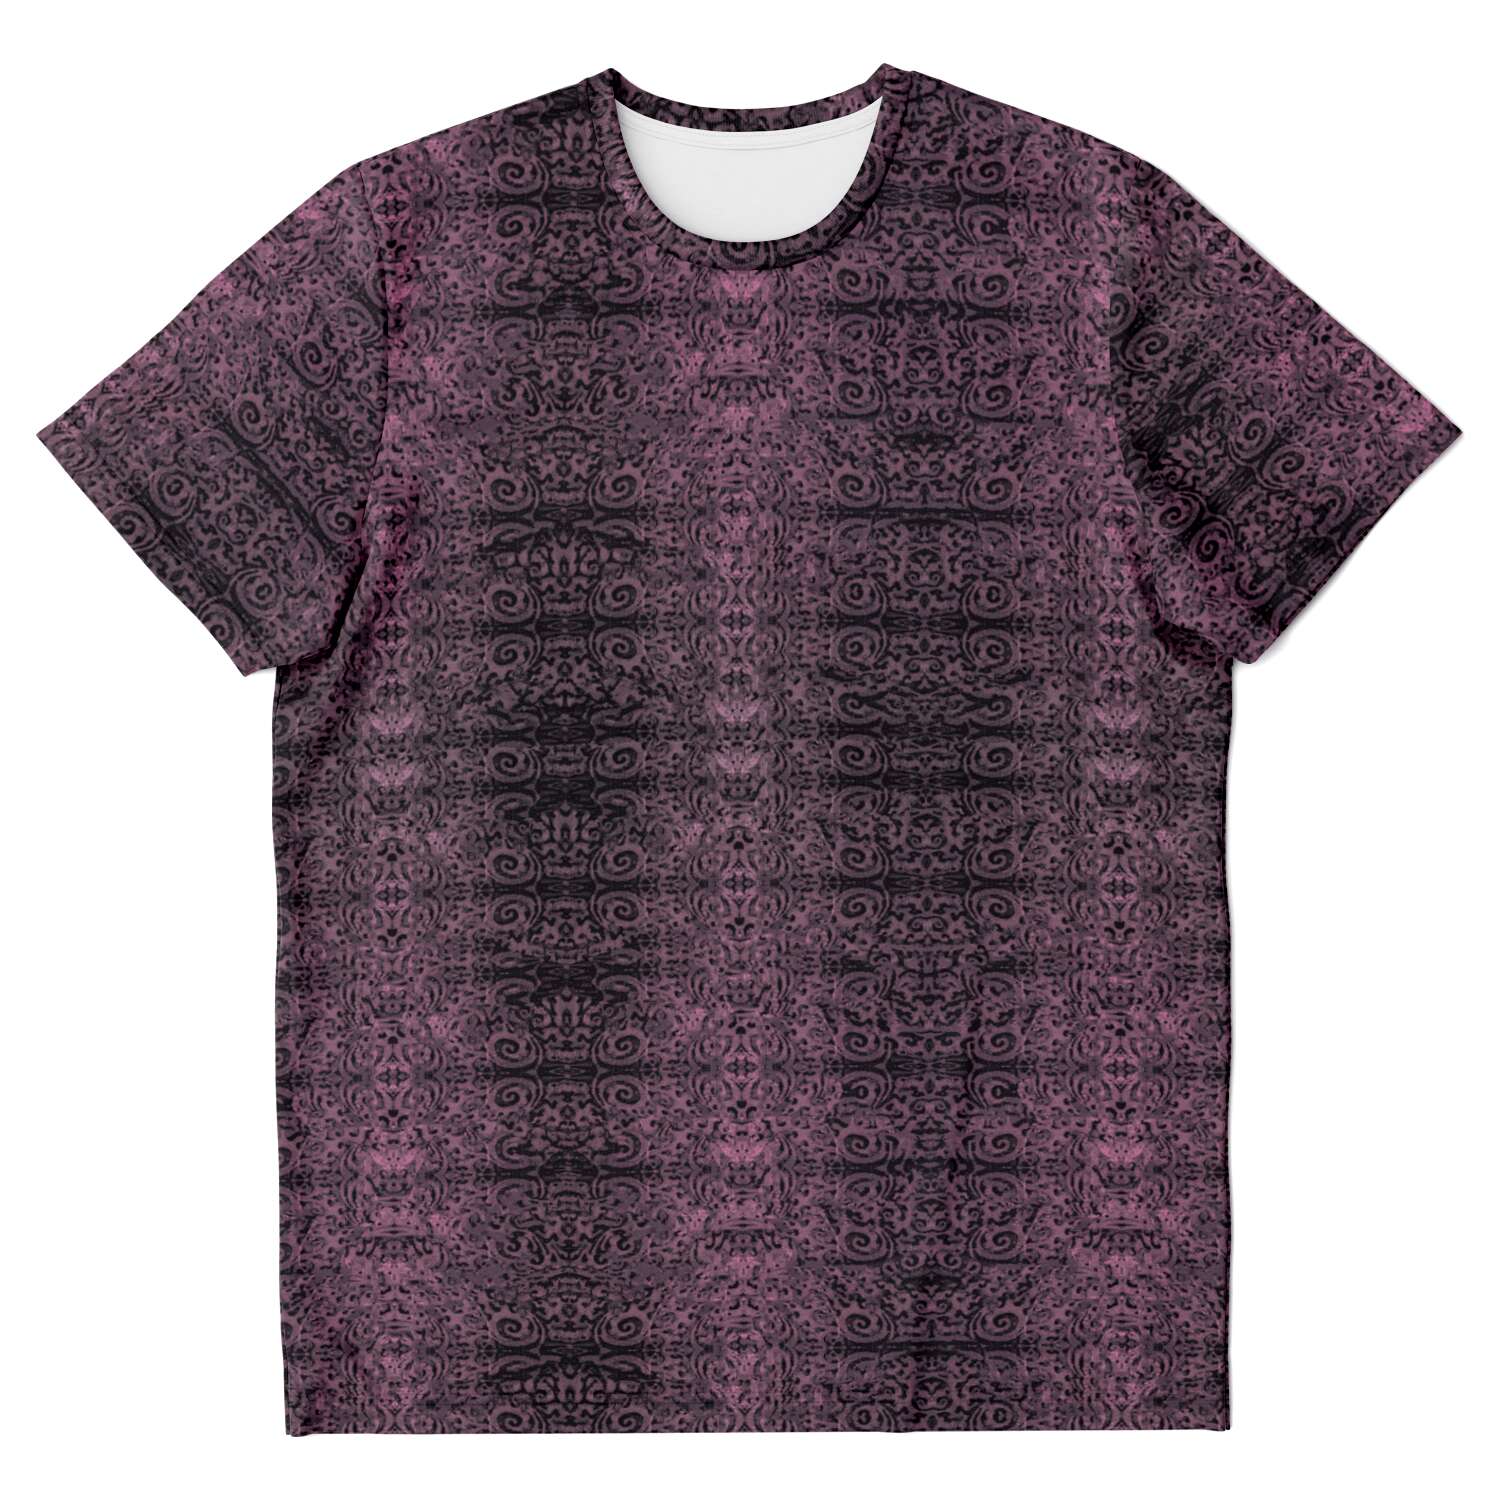 AOP T-Shirt XS Purple & Black, Trippy, Rave, EDM, Festival, Psychedelic Psy AOP Graphic Art Tee T-Shirt